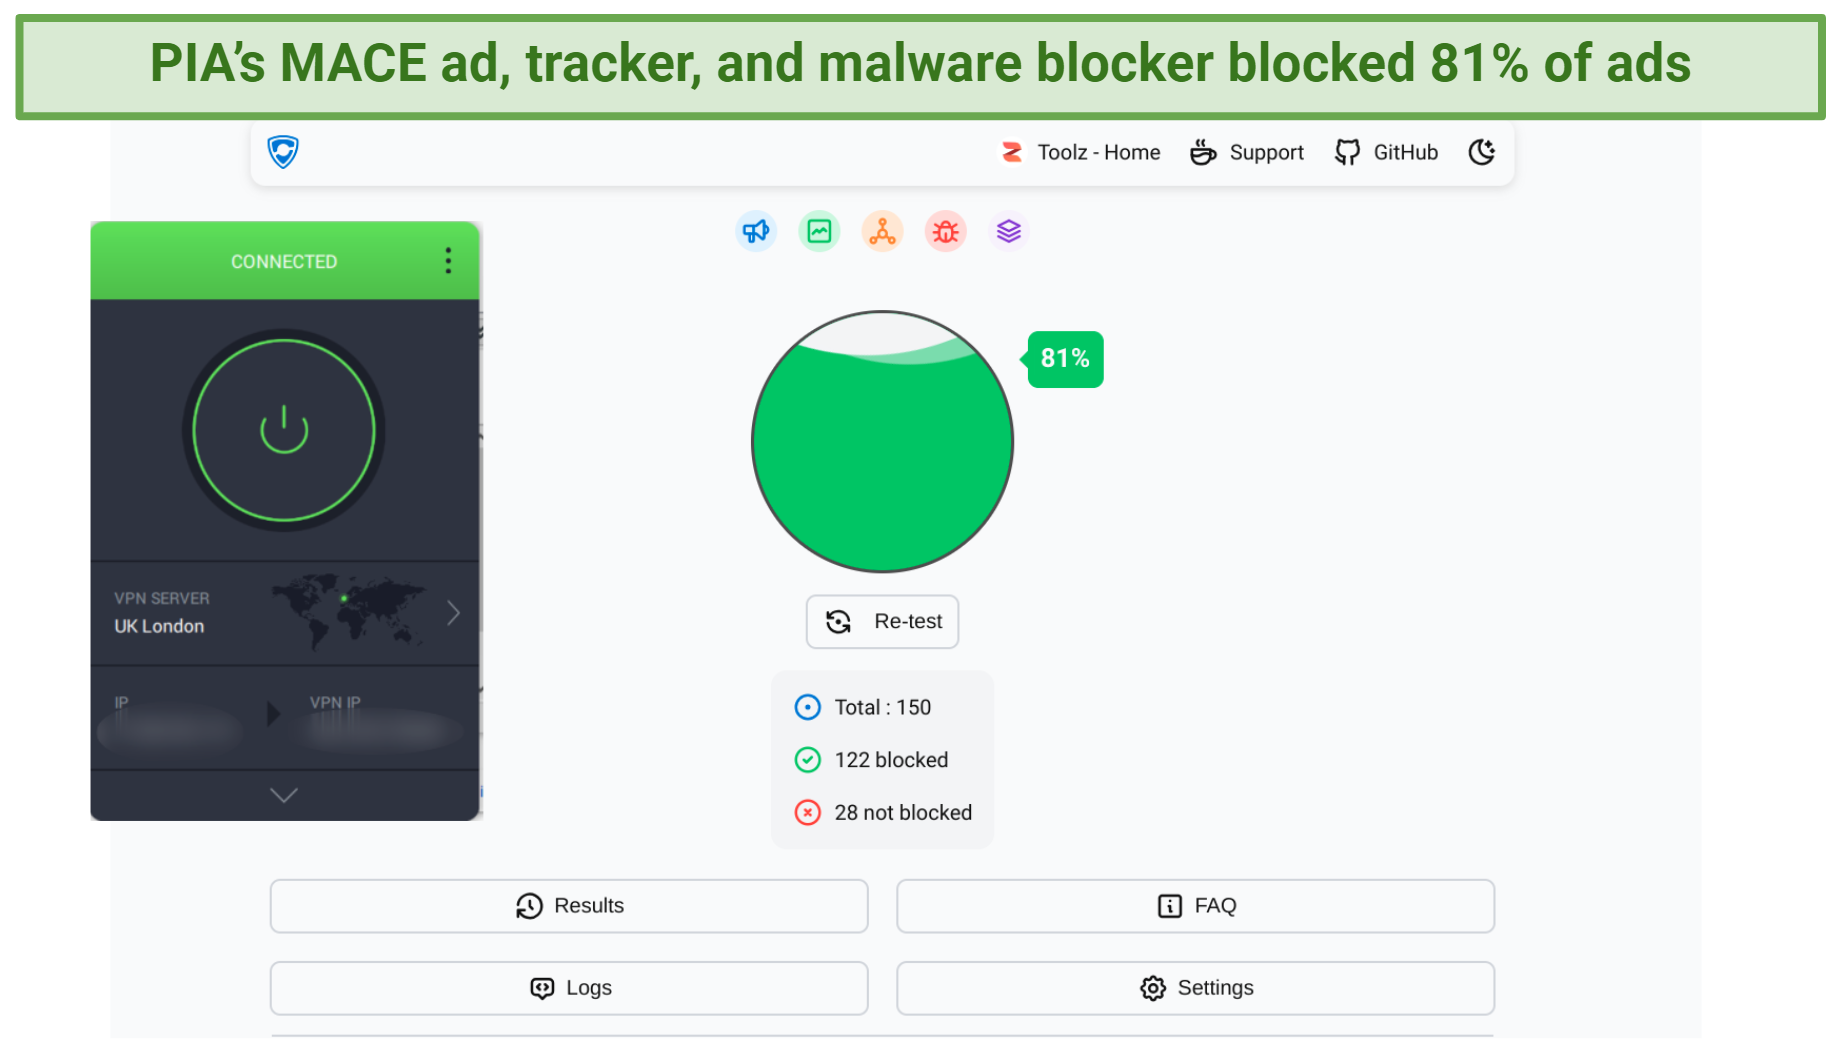 Screenshot of PIA's MACE ad, tracker, and malware blocker test results